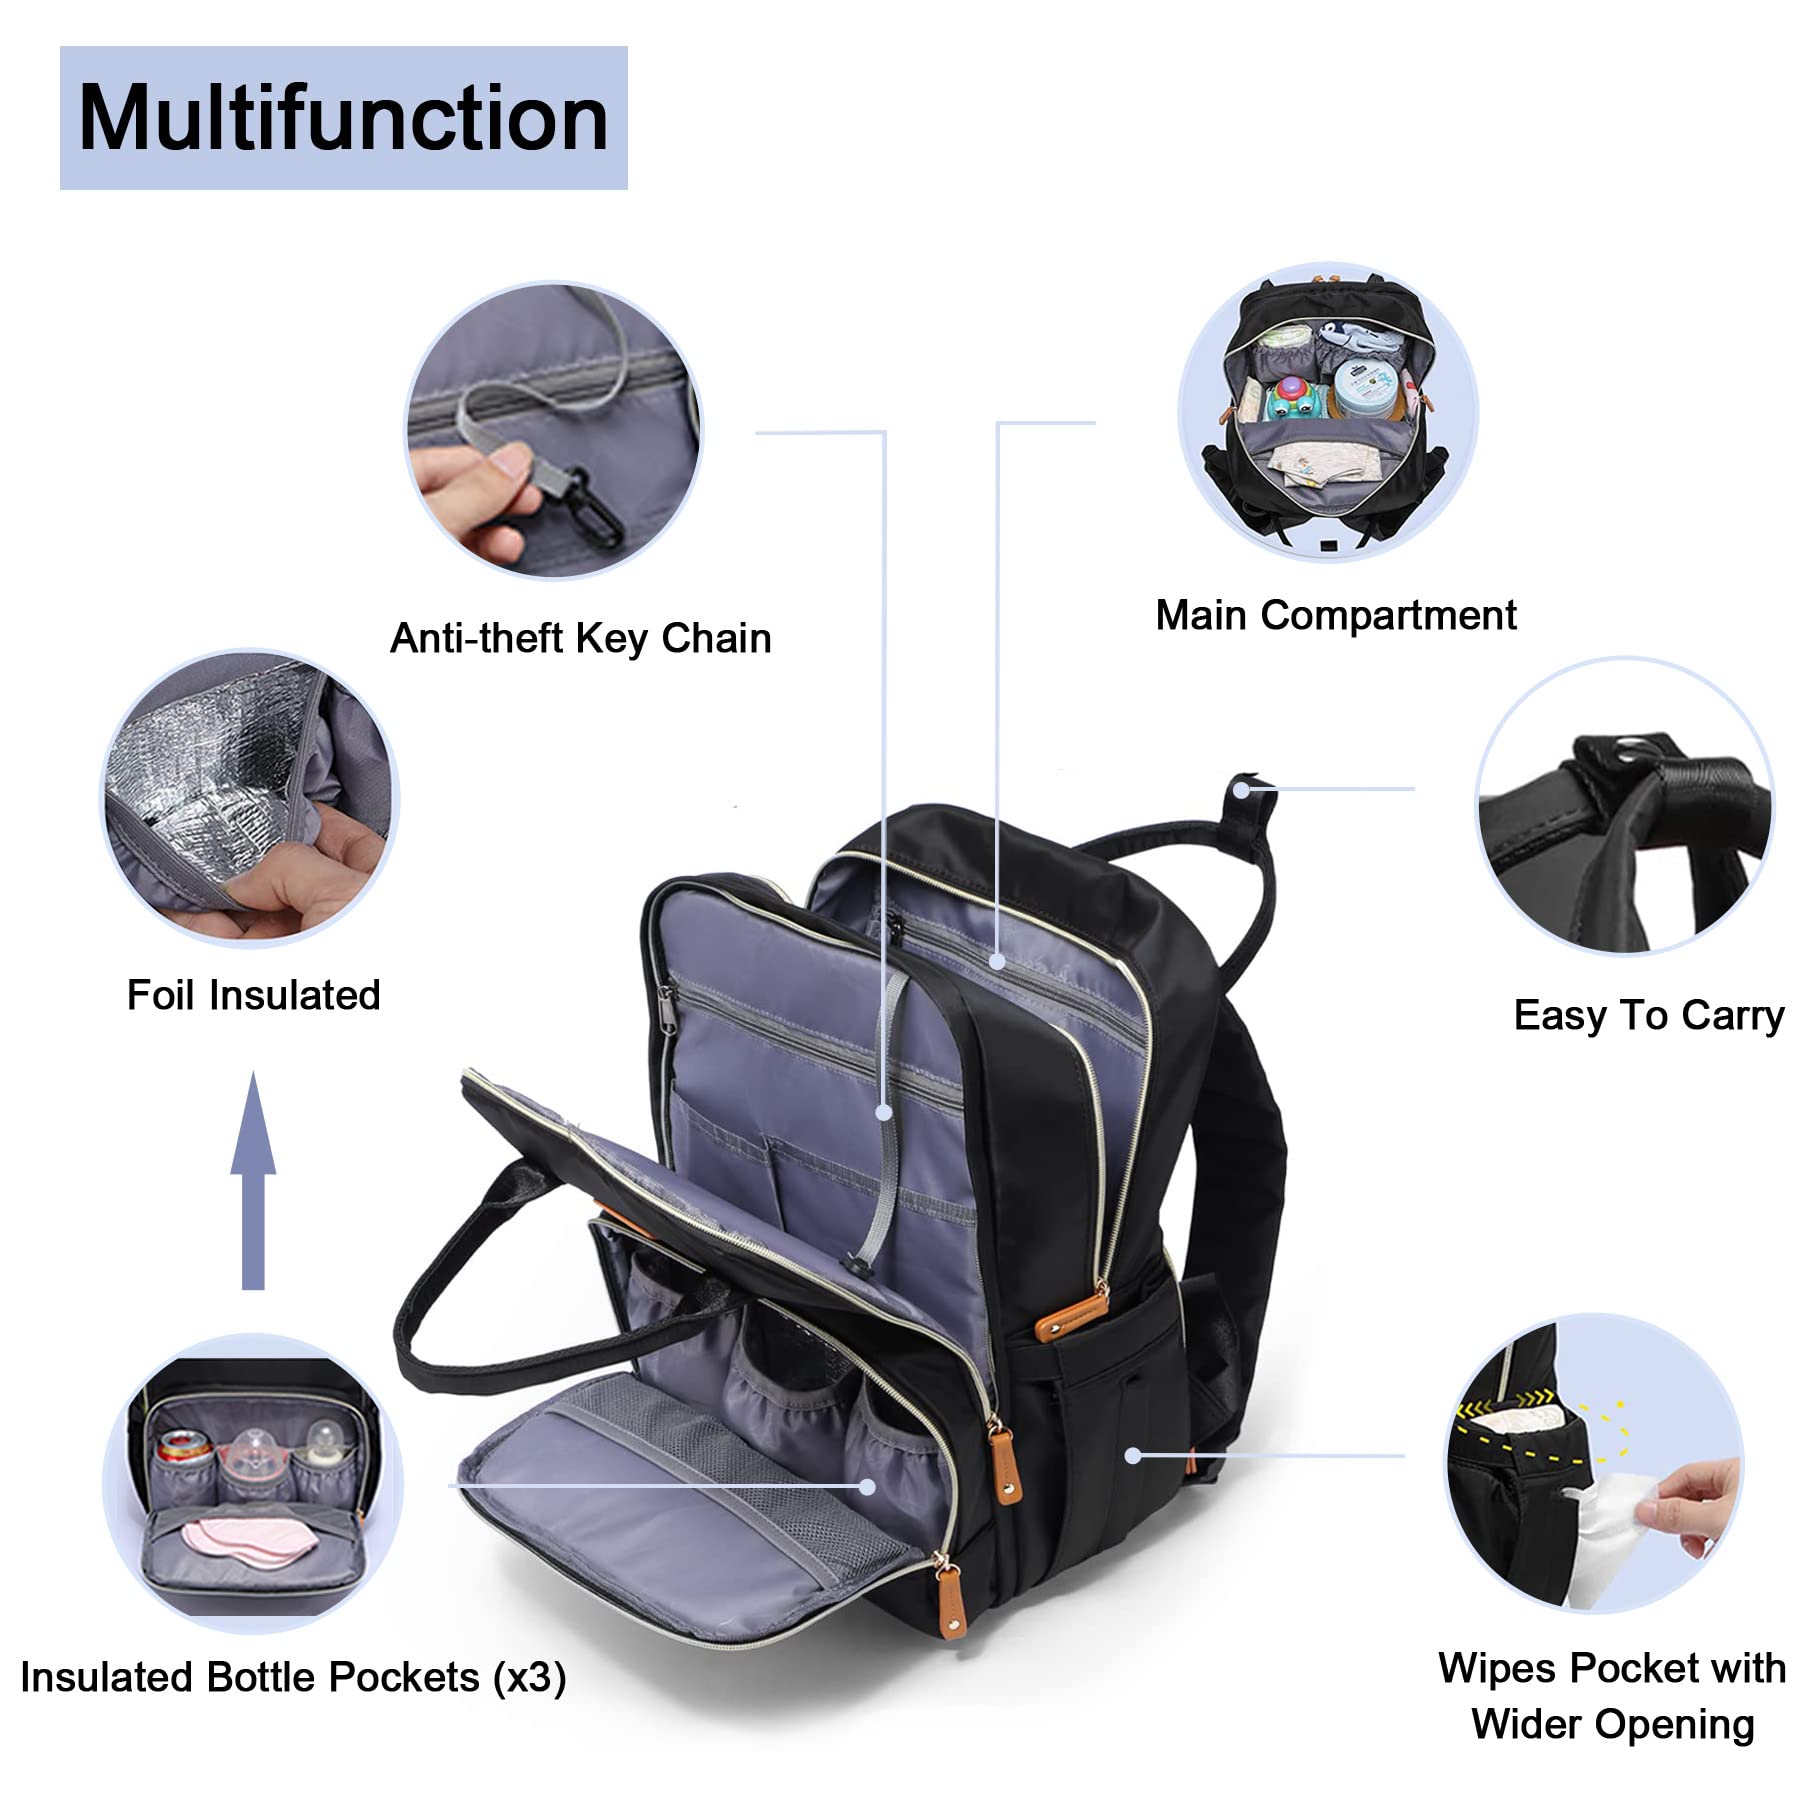 NUNET Diaper Bag Backpack Black W. Portable Changing Pad, Stroller Straps, Large Diaper Bag for 2 Kids (Girls/Boys), Multipurpose Lightweight Travel Back Pack for Moms Dads